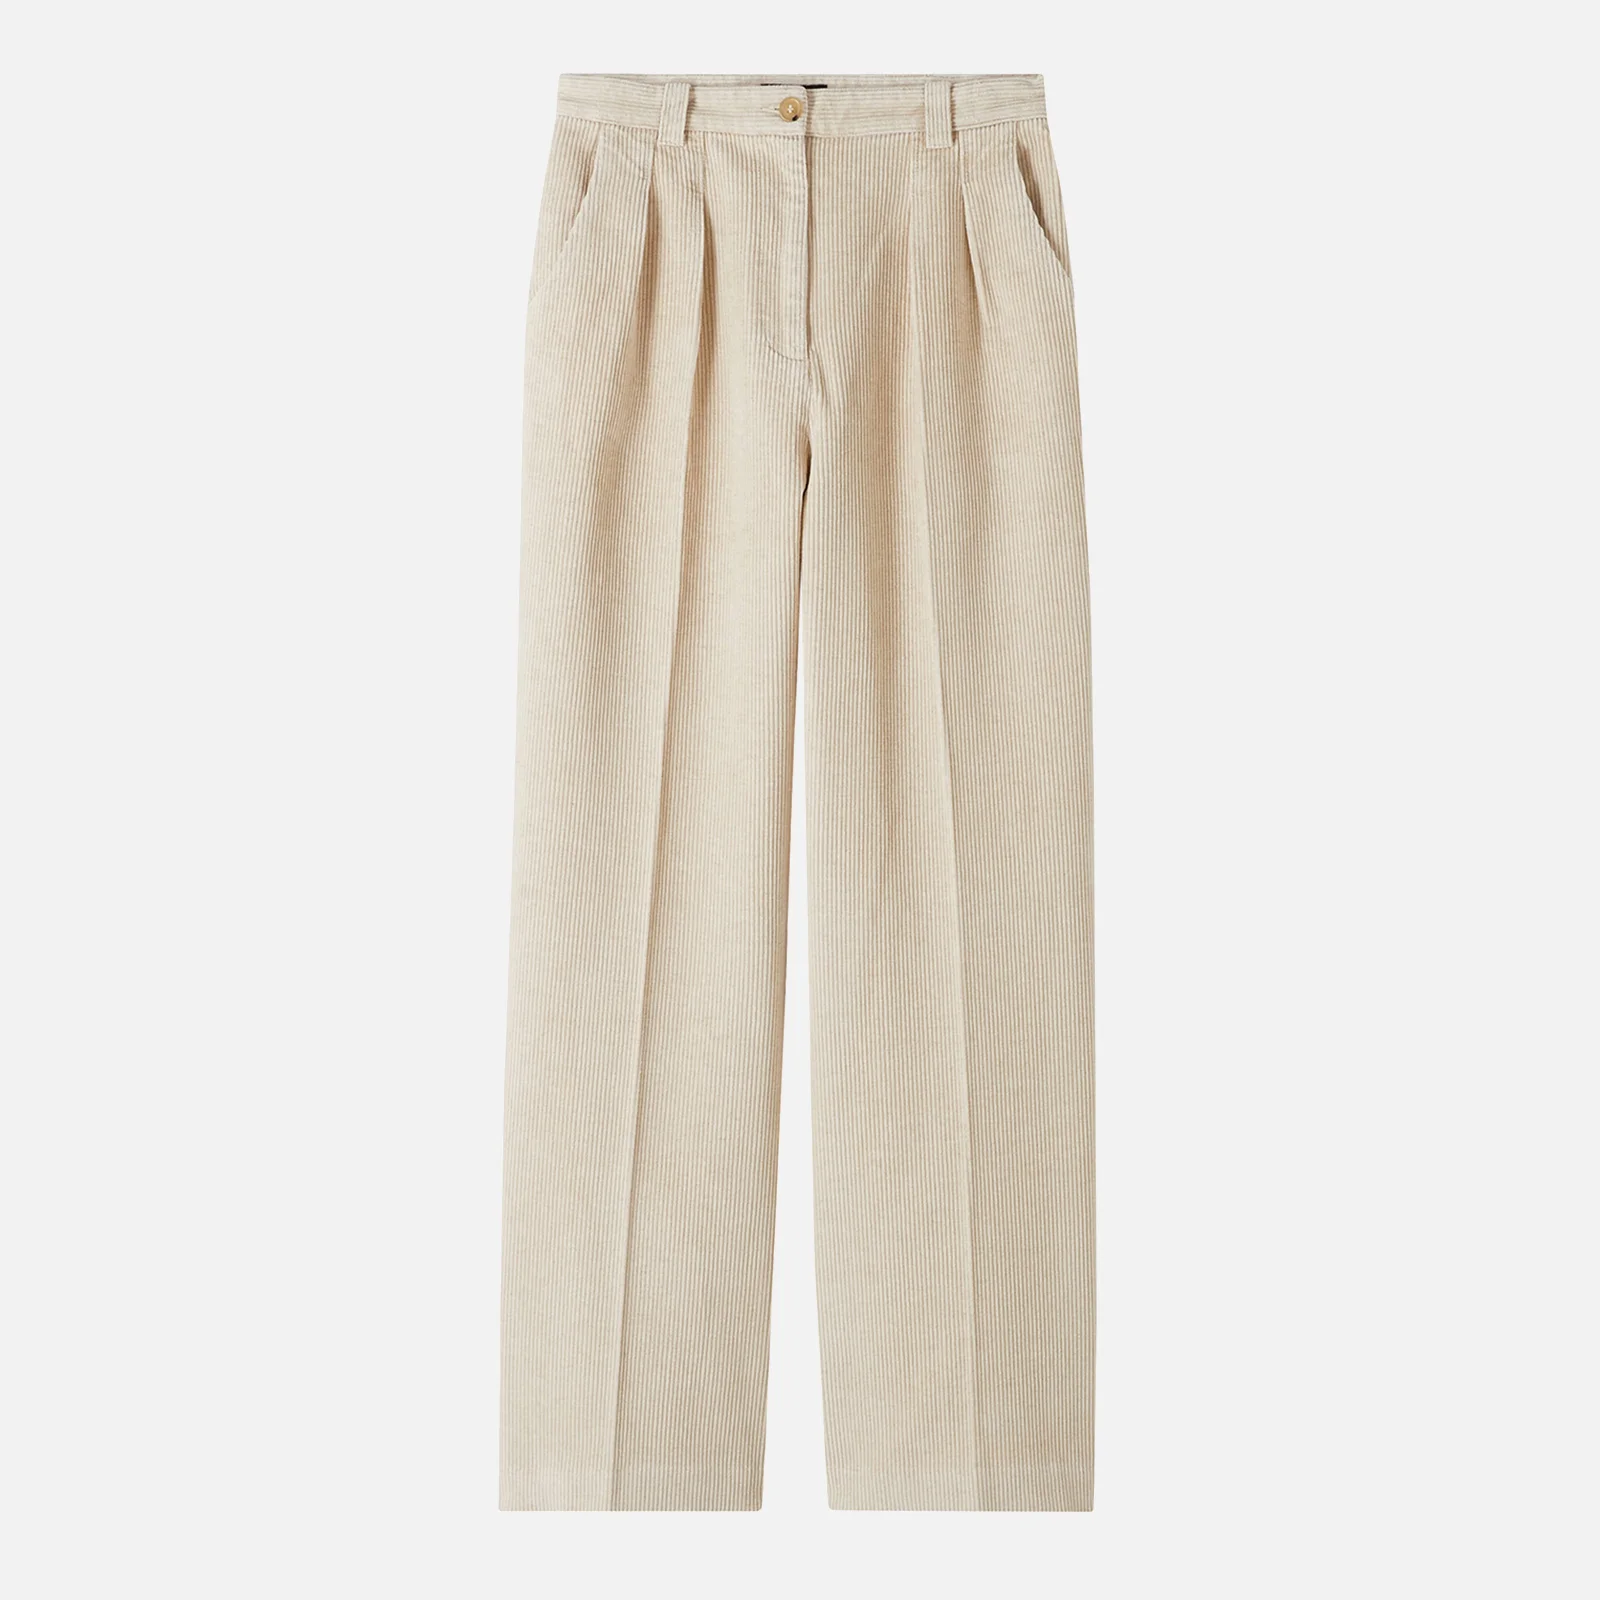 A.P.C. Cotton and Linen-Blend Corduroy Trousers - FR 36/UK 8 Image 1